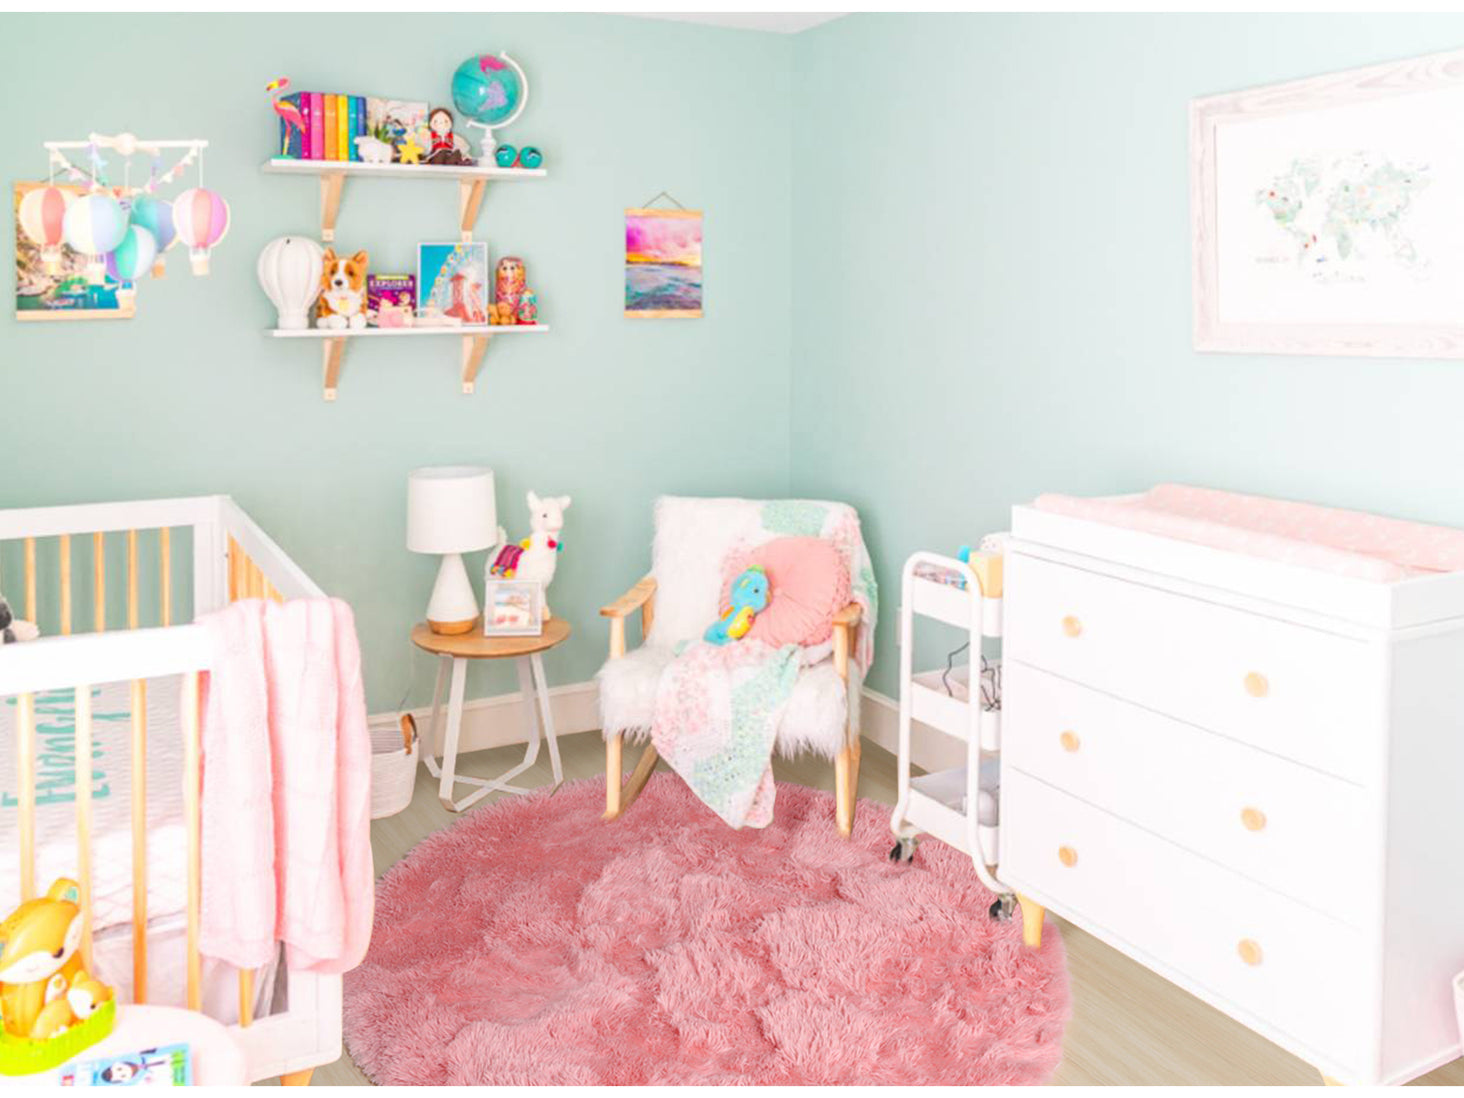 Modern Non-Slip Blush Pink Round rug for Kids Girls Teen Room